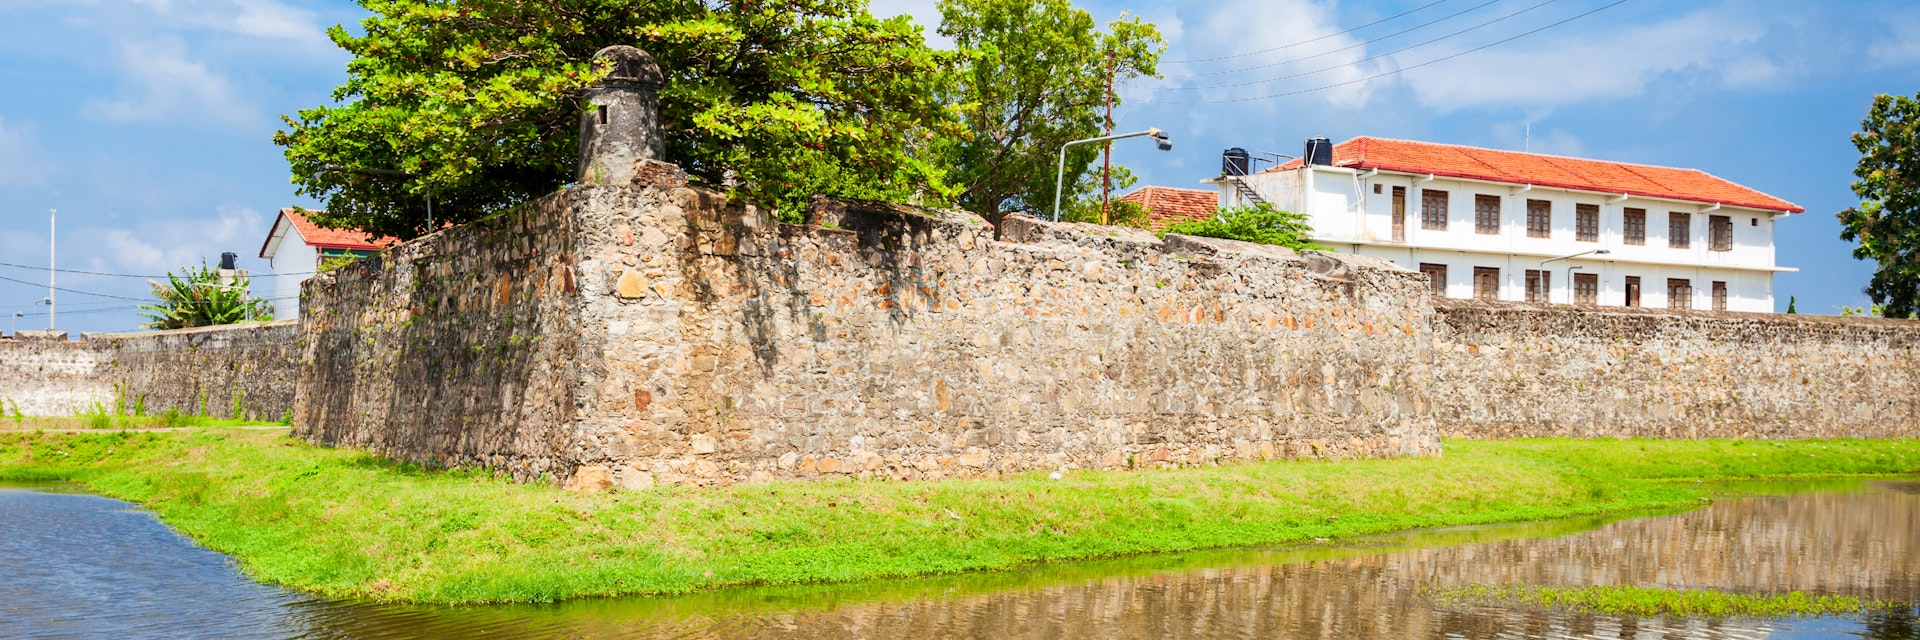 The Batticaloa Fort is the old portuguese fort in the center of Batticaloa city, Sri Lanka.